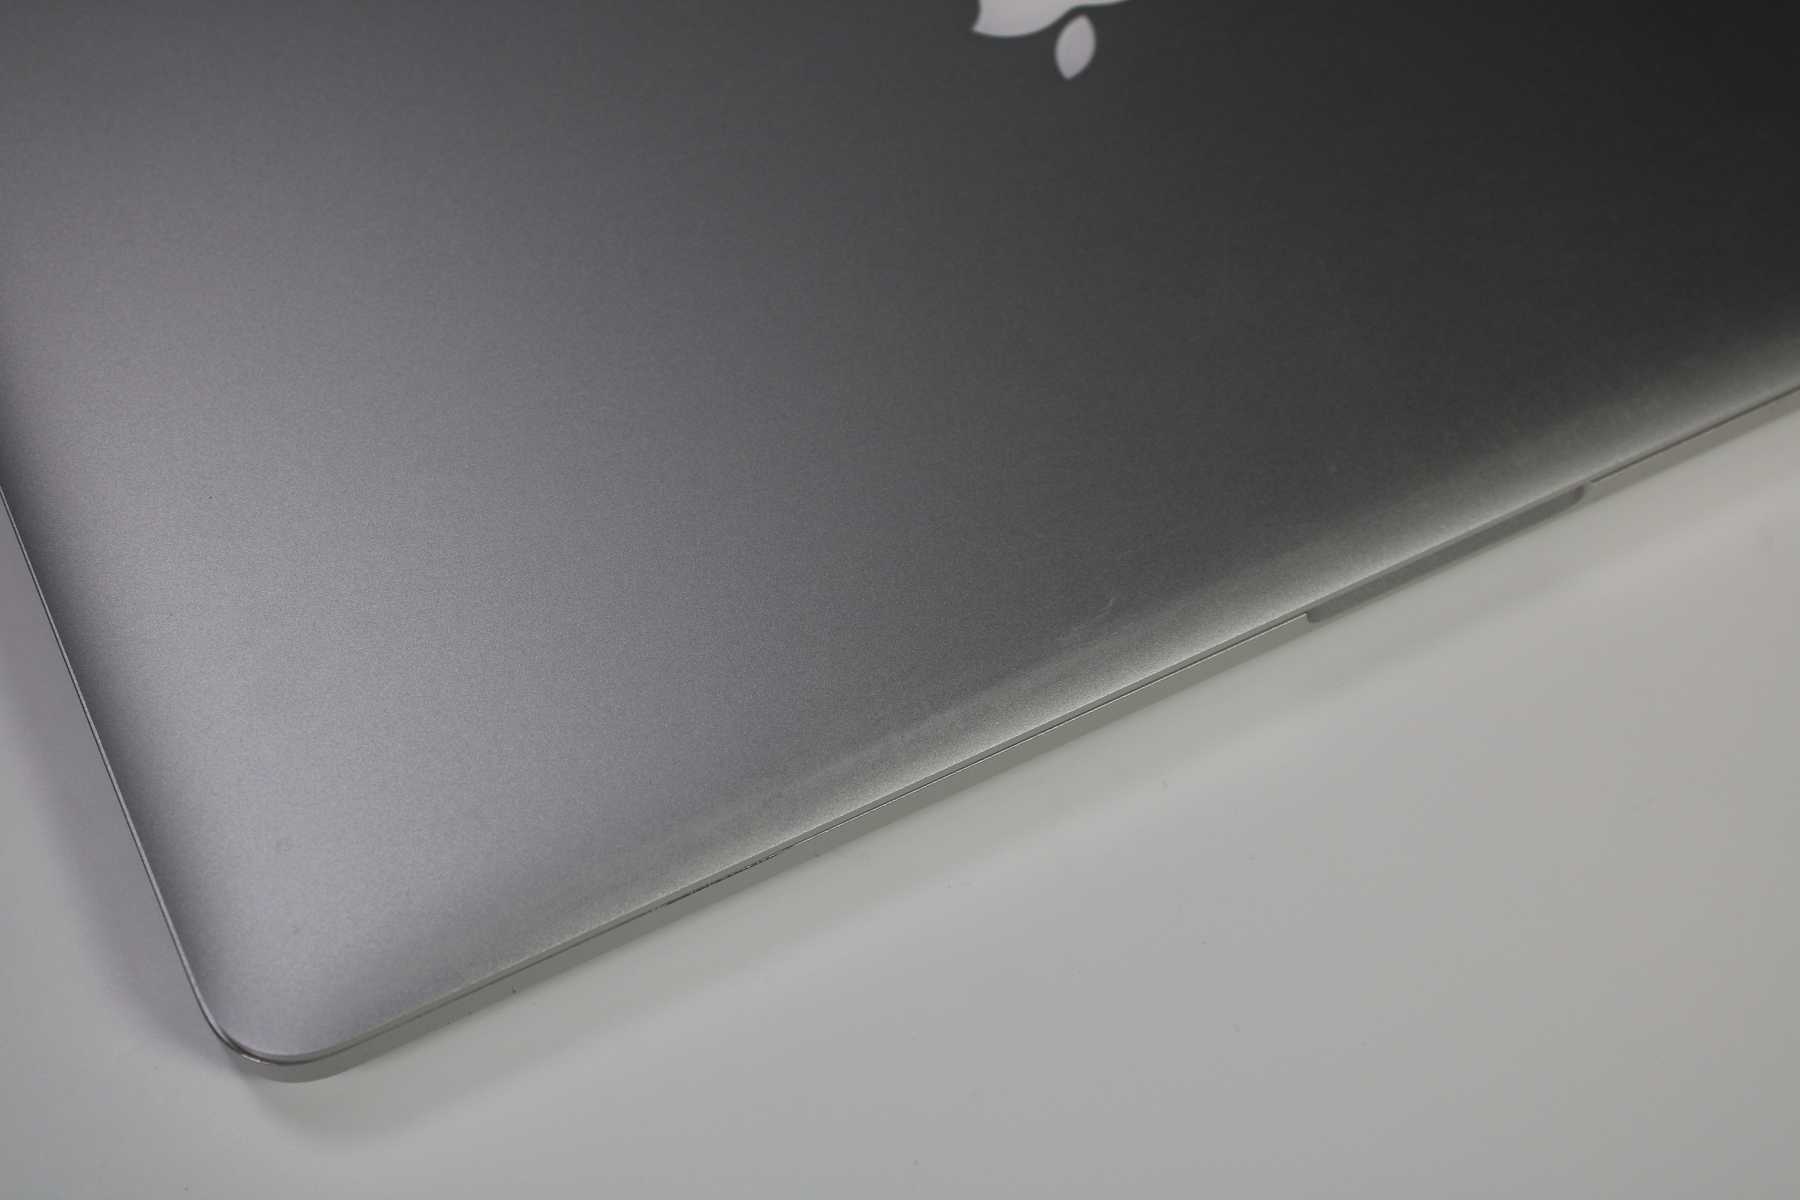 Apple MacBook Pro 15-inch 2015 2.5GHz Core i7 16GB RAM Dual GPU (Wear & Tear Special)